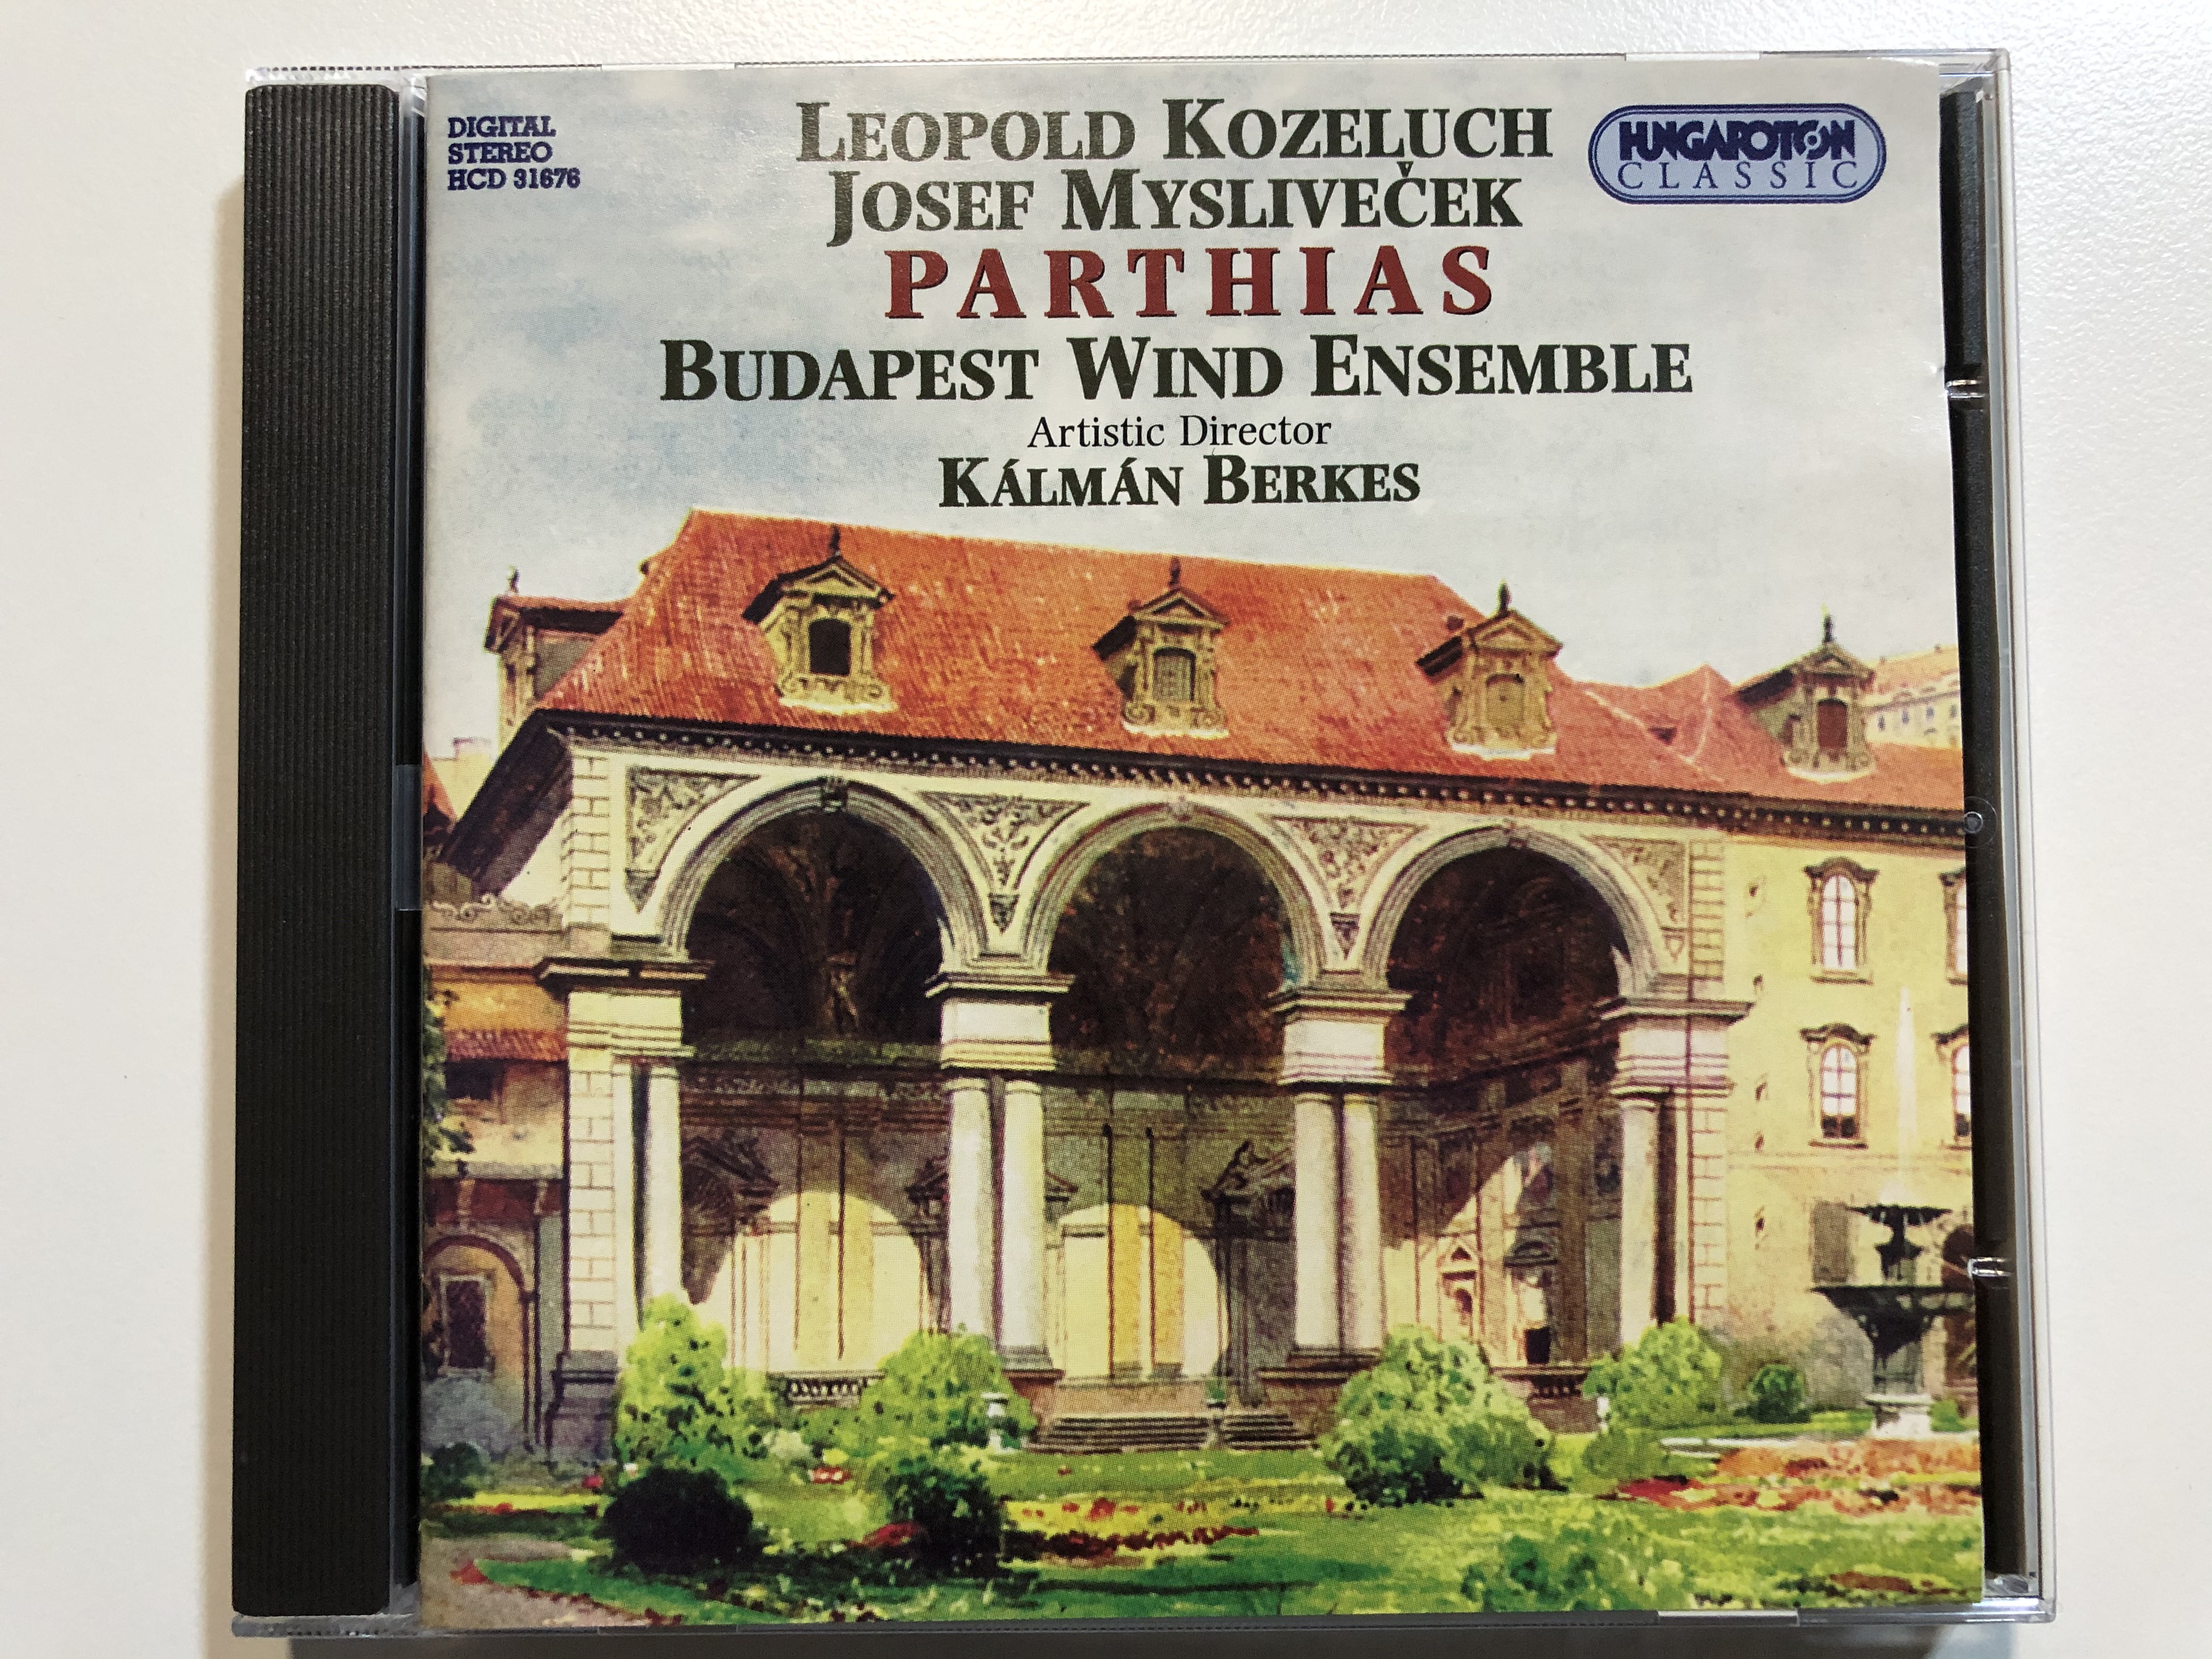 leopold-kozeluch-josef-myslive-ek-parthias-budapest-wind-ensemble-artistic-director-kalman-berkes-hungaroton-classic-audio-cd-1997-stereo-hcd-31676-1-.jpg